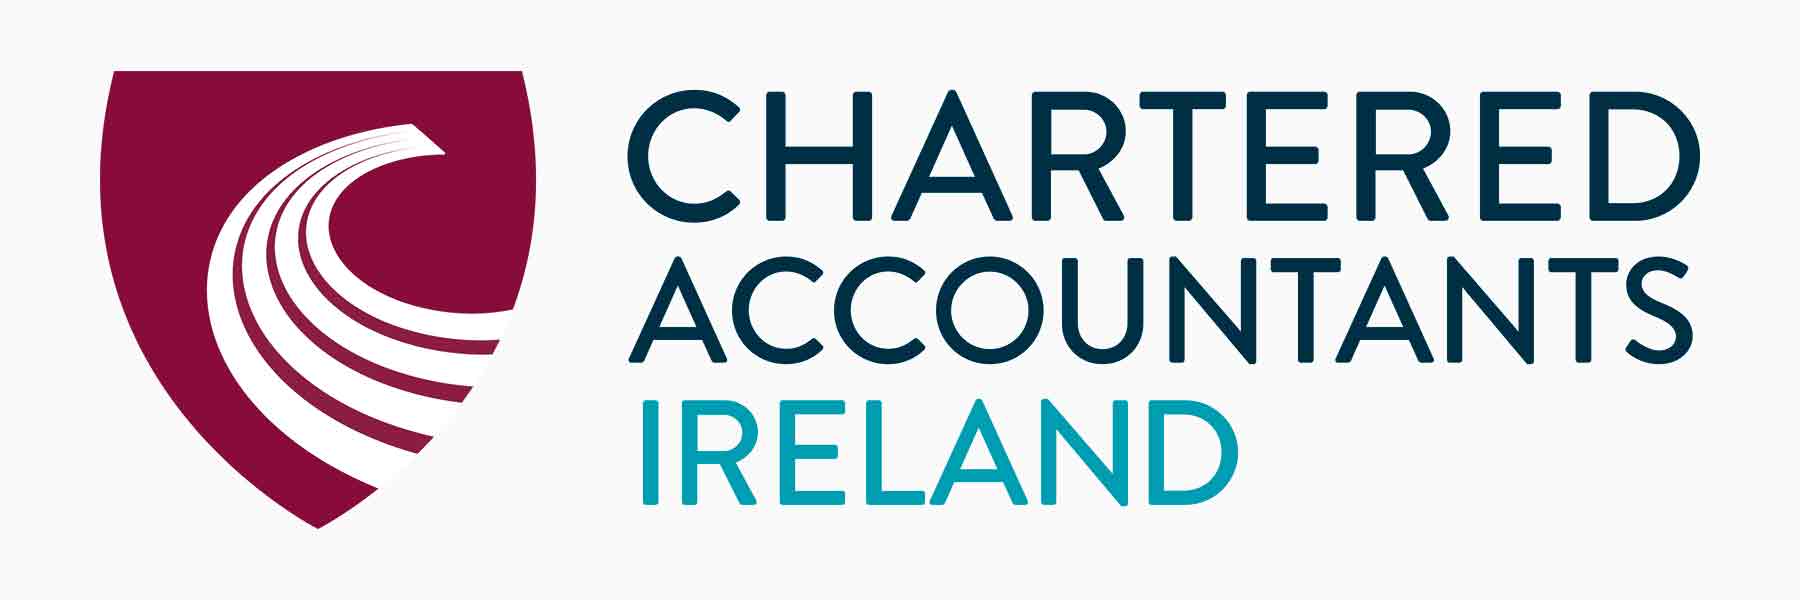 Chartered Accountants Ireland Logo-min